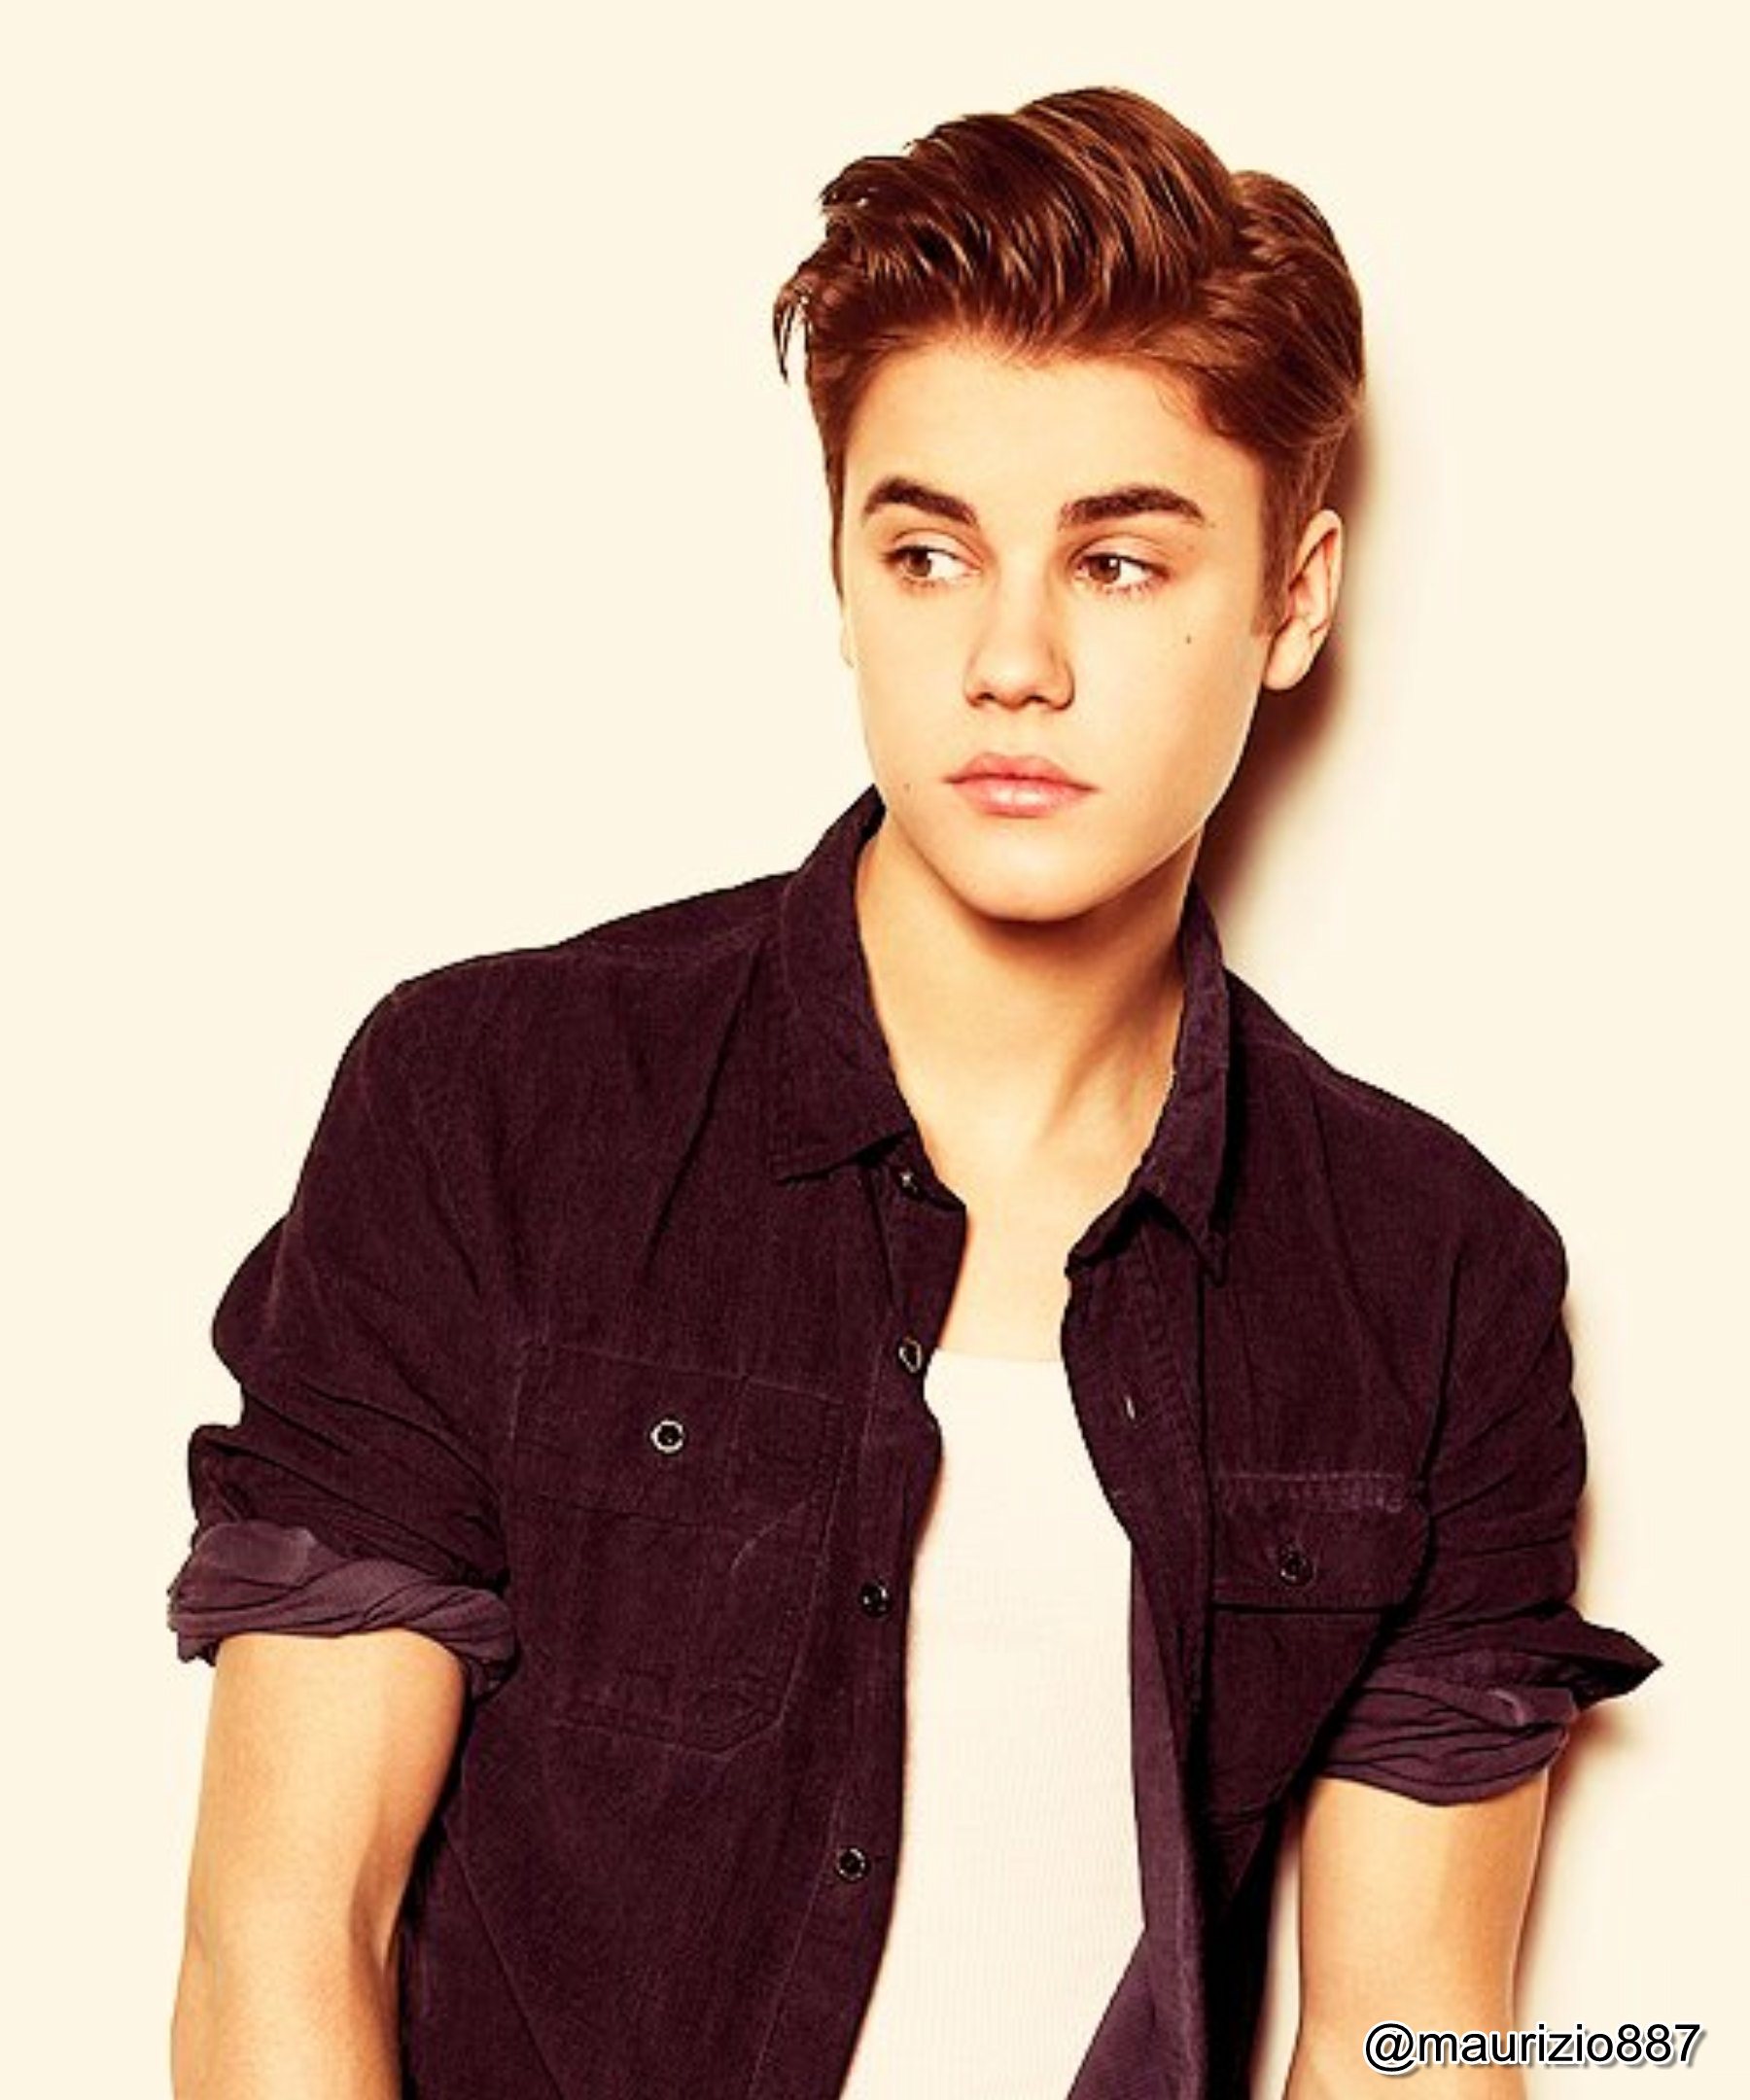 justin, 2012 - Justin Bieber Photo (30694648) - Fanpop